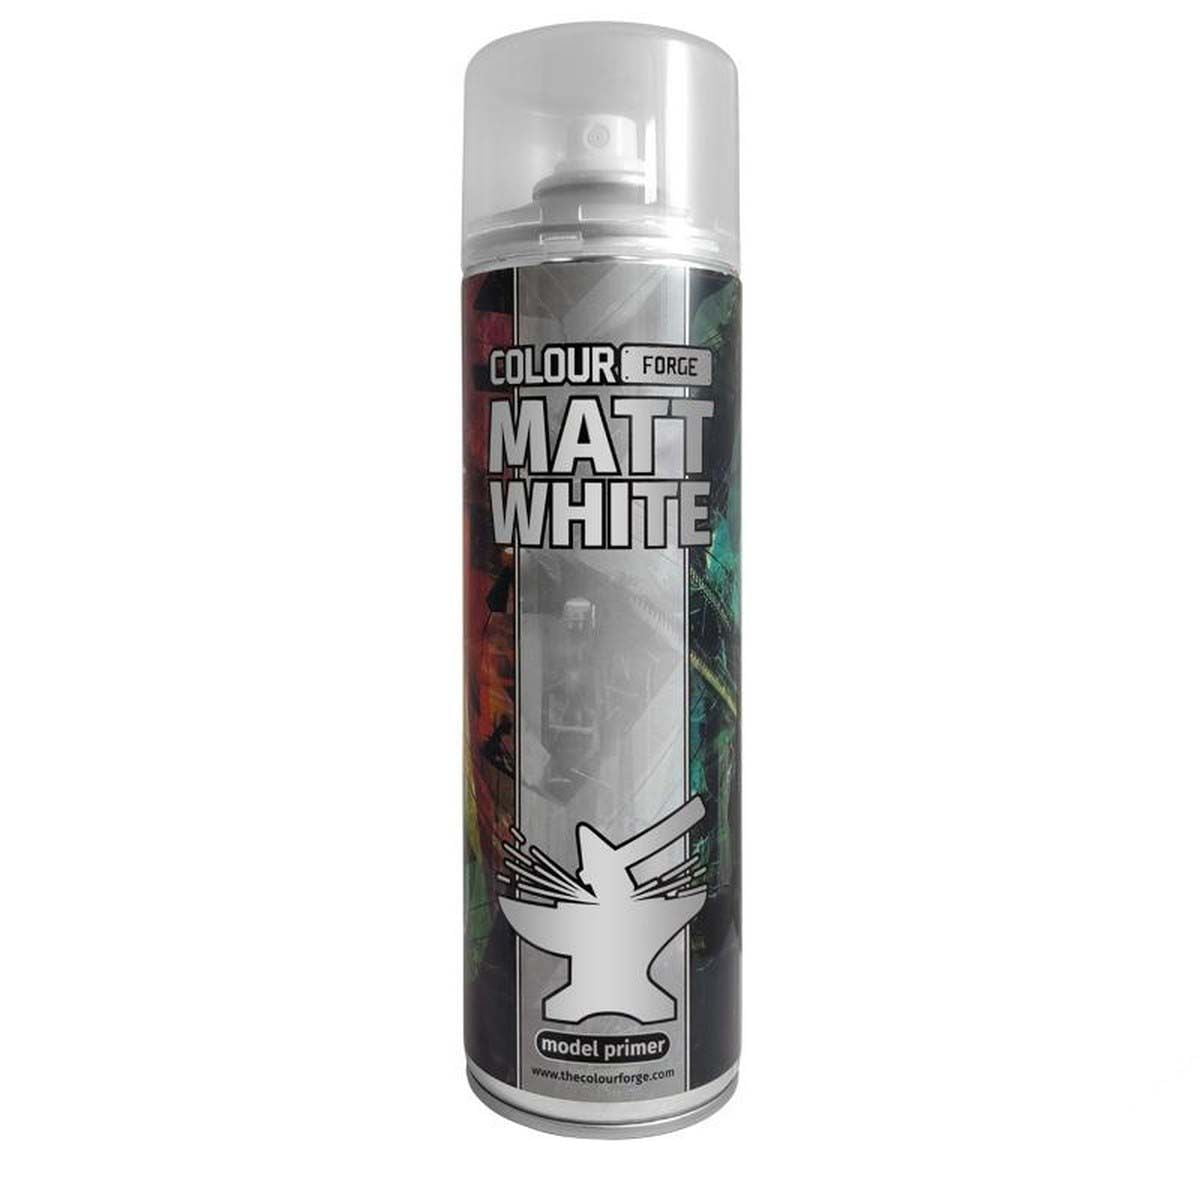 Colour Forge Matt White Spray